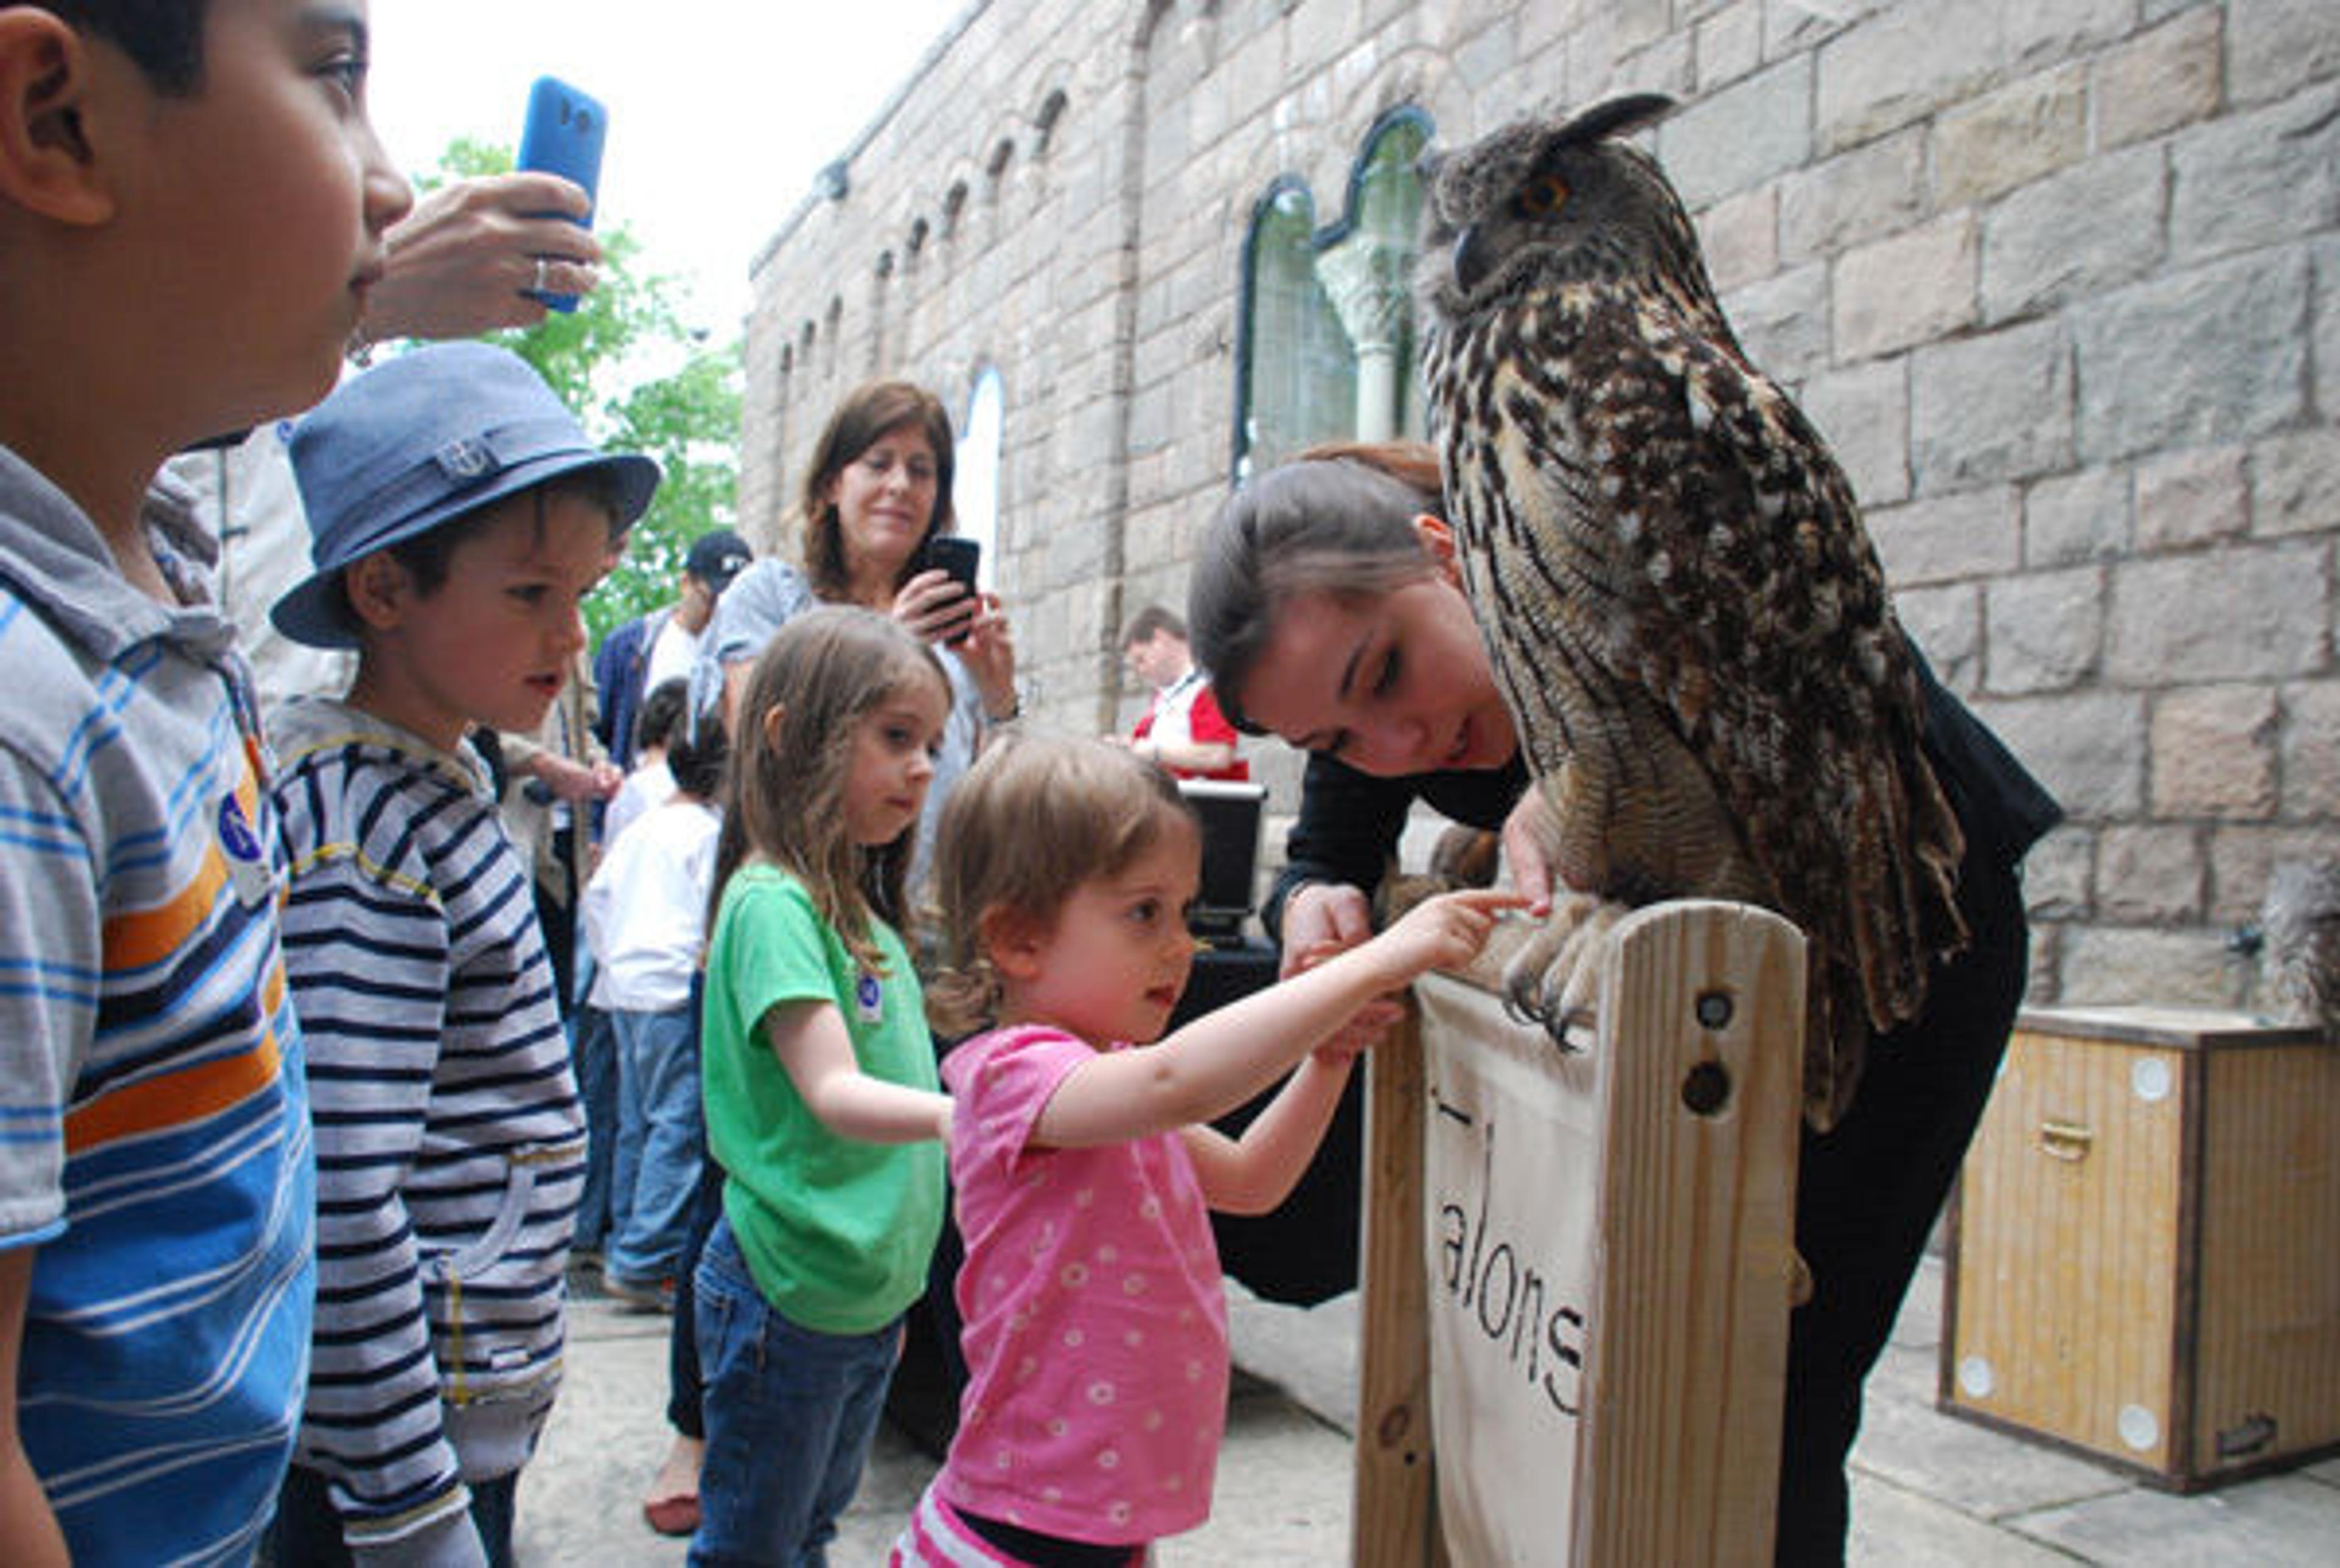 Talon Schumacher introduces young visitors to Big Mama, an European eagle owl